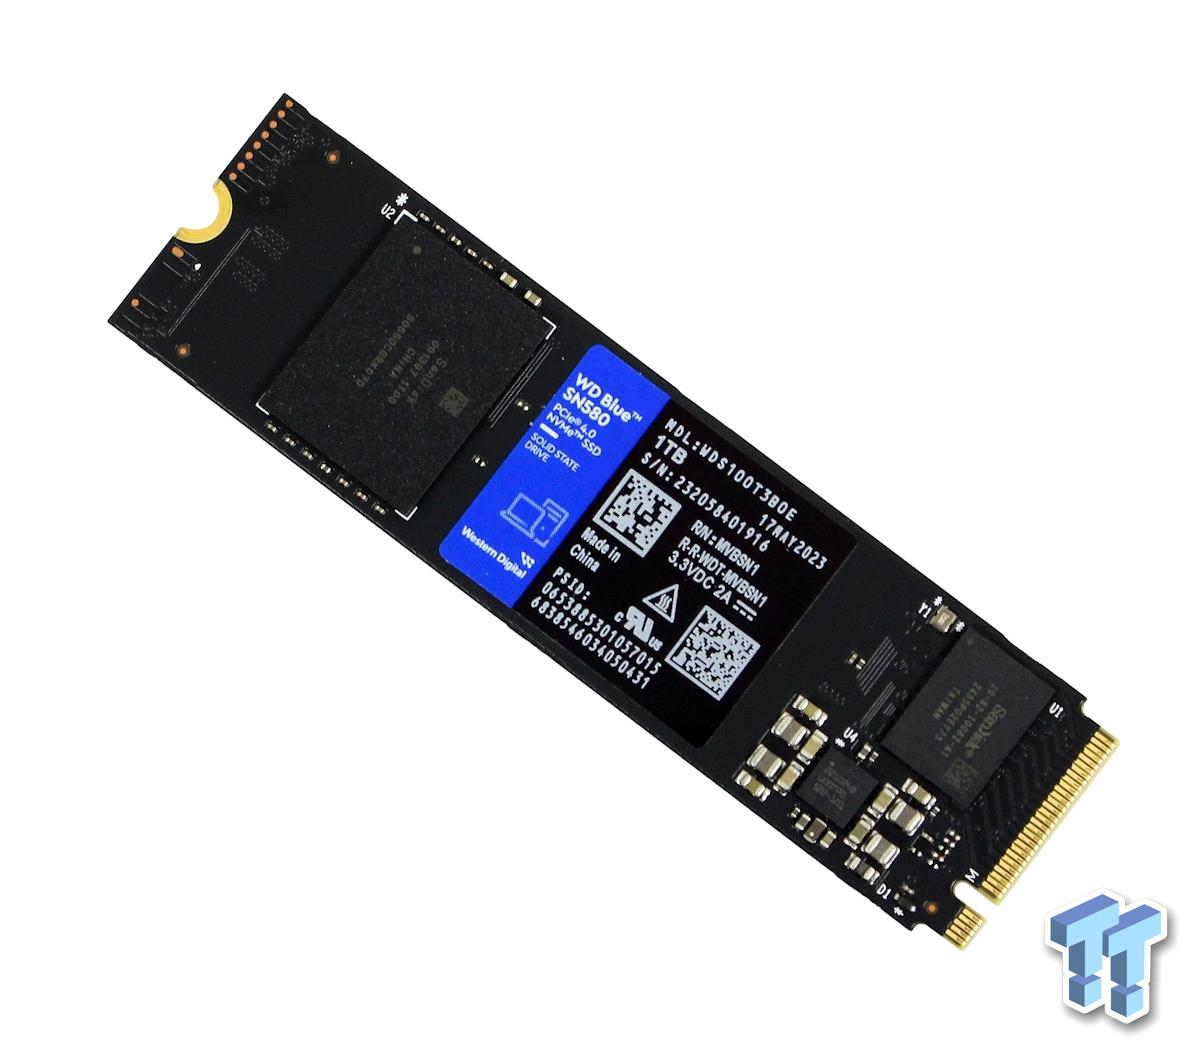 Western Digital WD Blue SN580 1TB SSD Review - Masterful DRAMless Performer